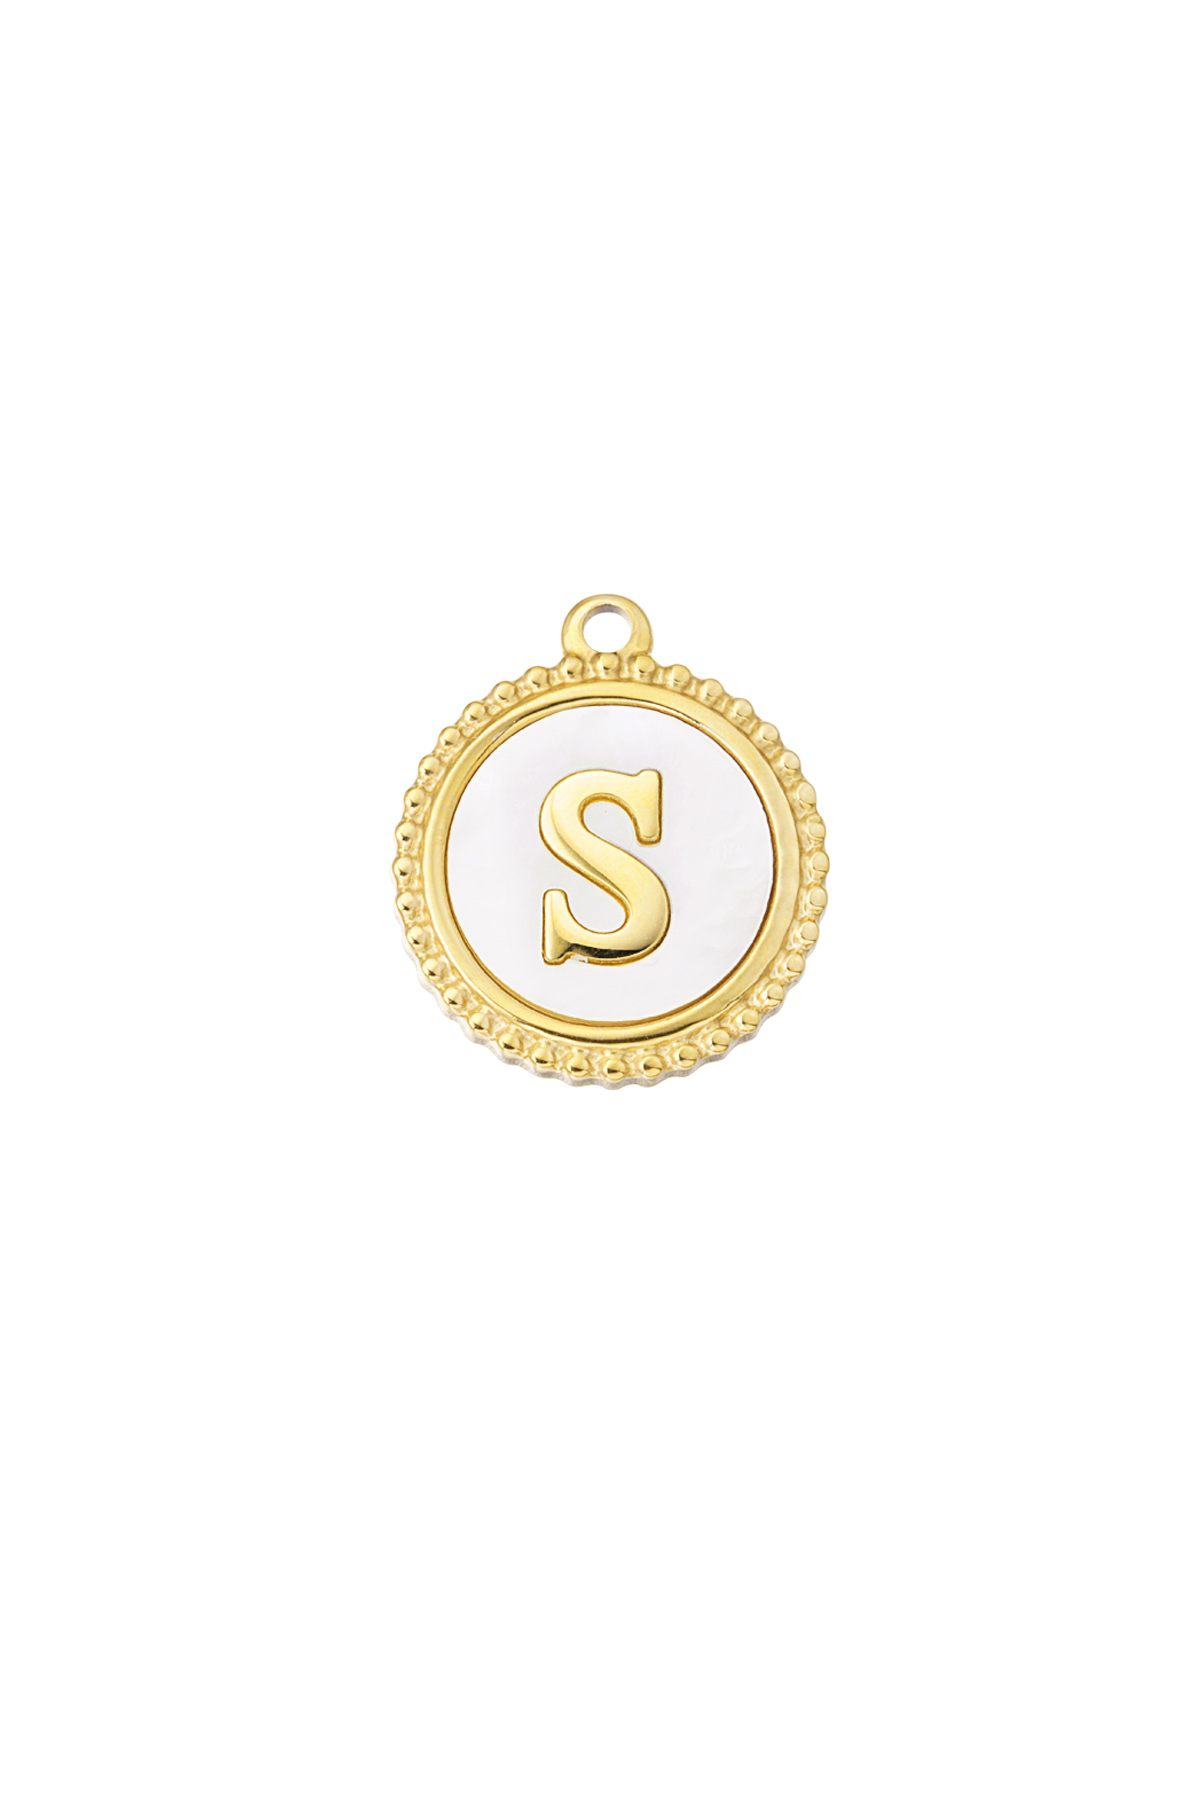 Gold / Charm elegante S - oro/bianco Immagine16